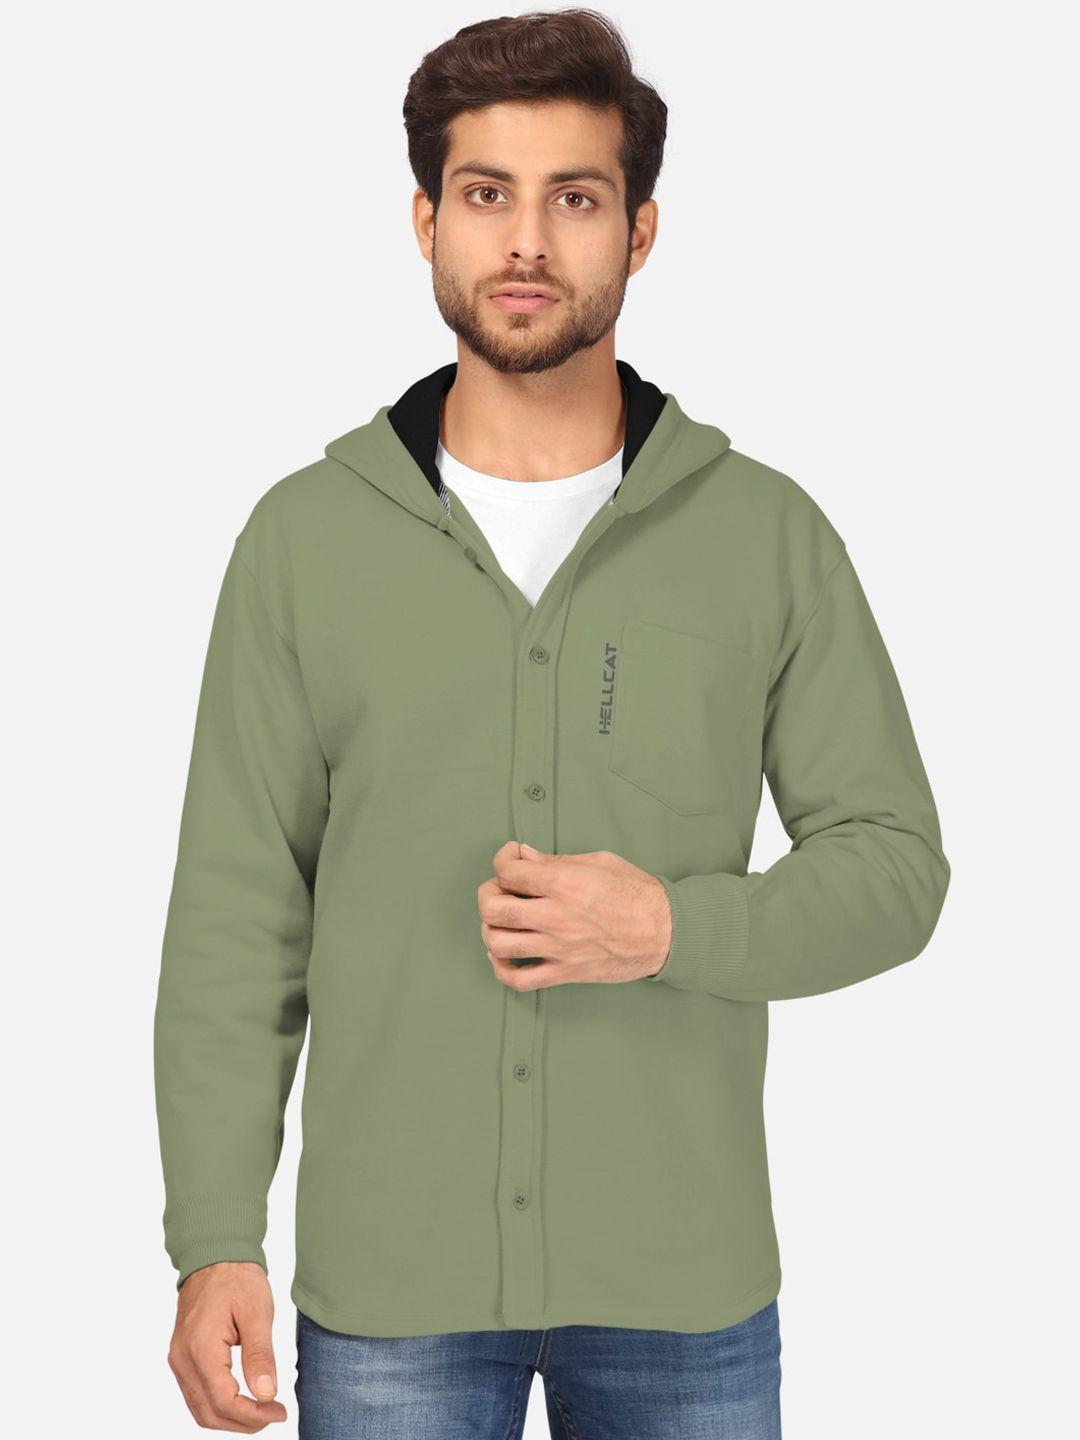 bullmer men lime green hooded sweatshirt